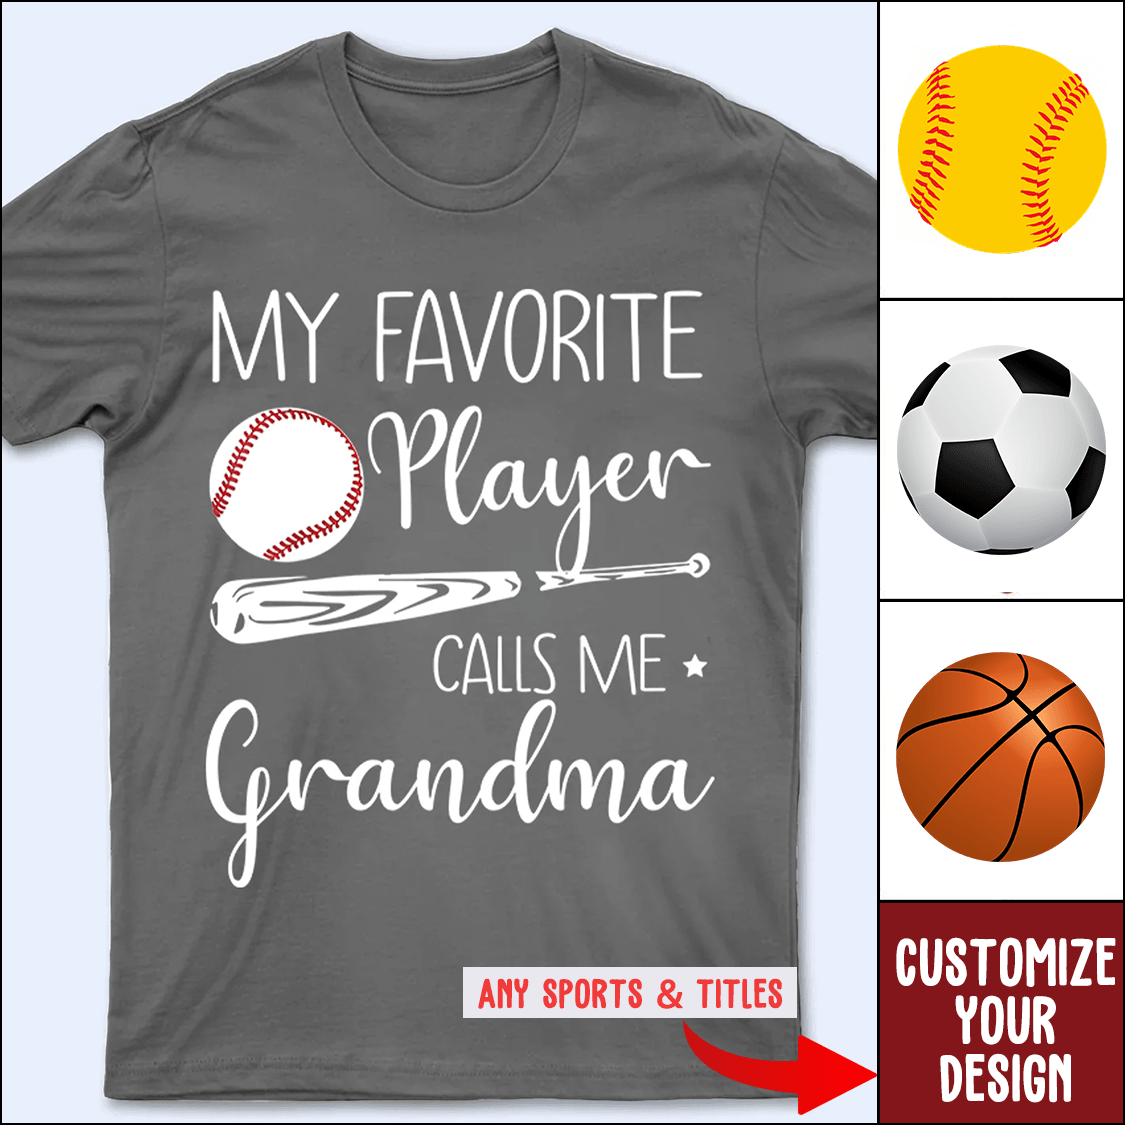 My Favorite Player Calls Me Grandma - Personalized Custom T Shirt - Birthday, Loving, Funny Gift for Grandma/Nana/Mimi, Mom, Wife, Grandparent